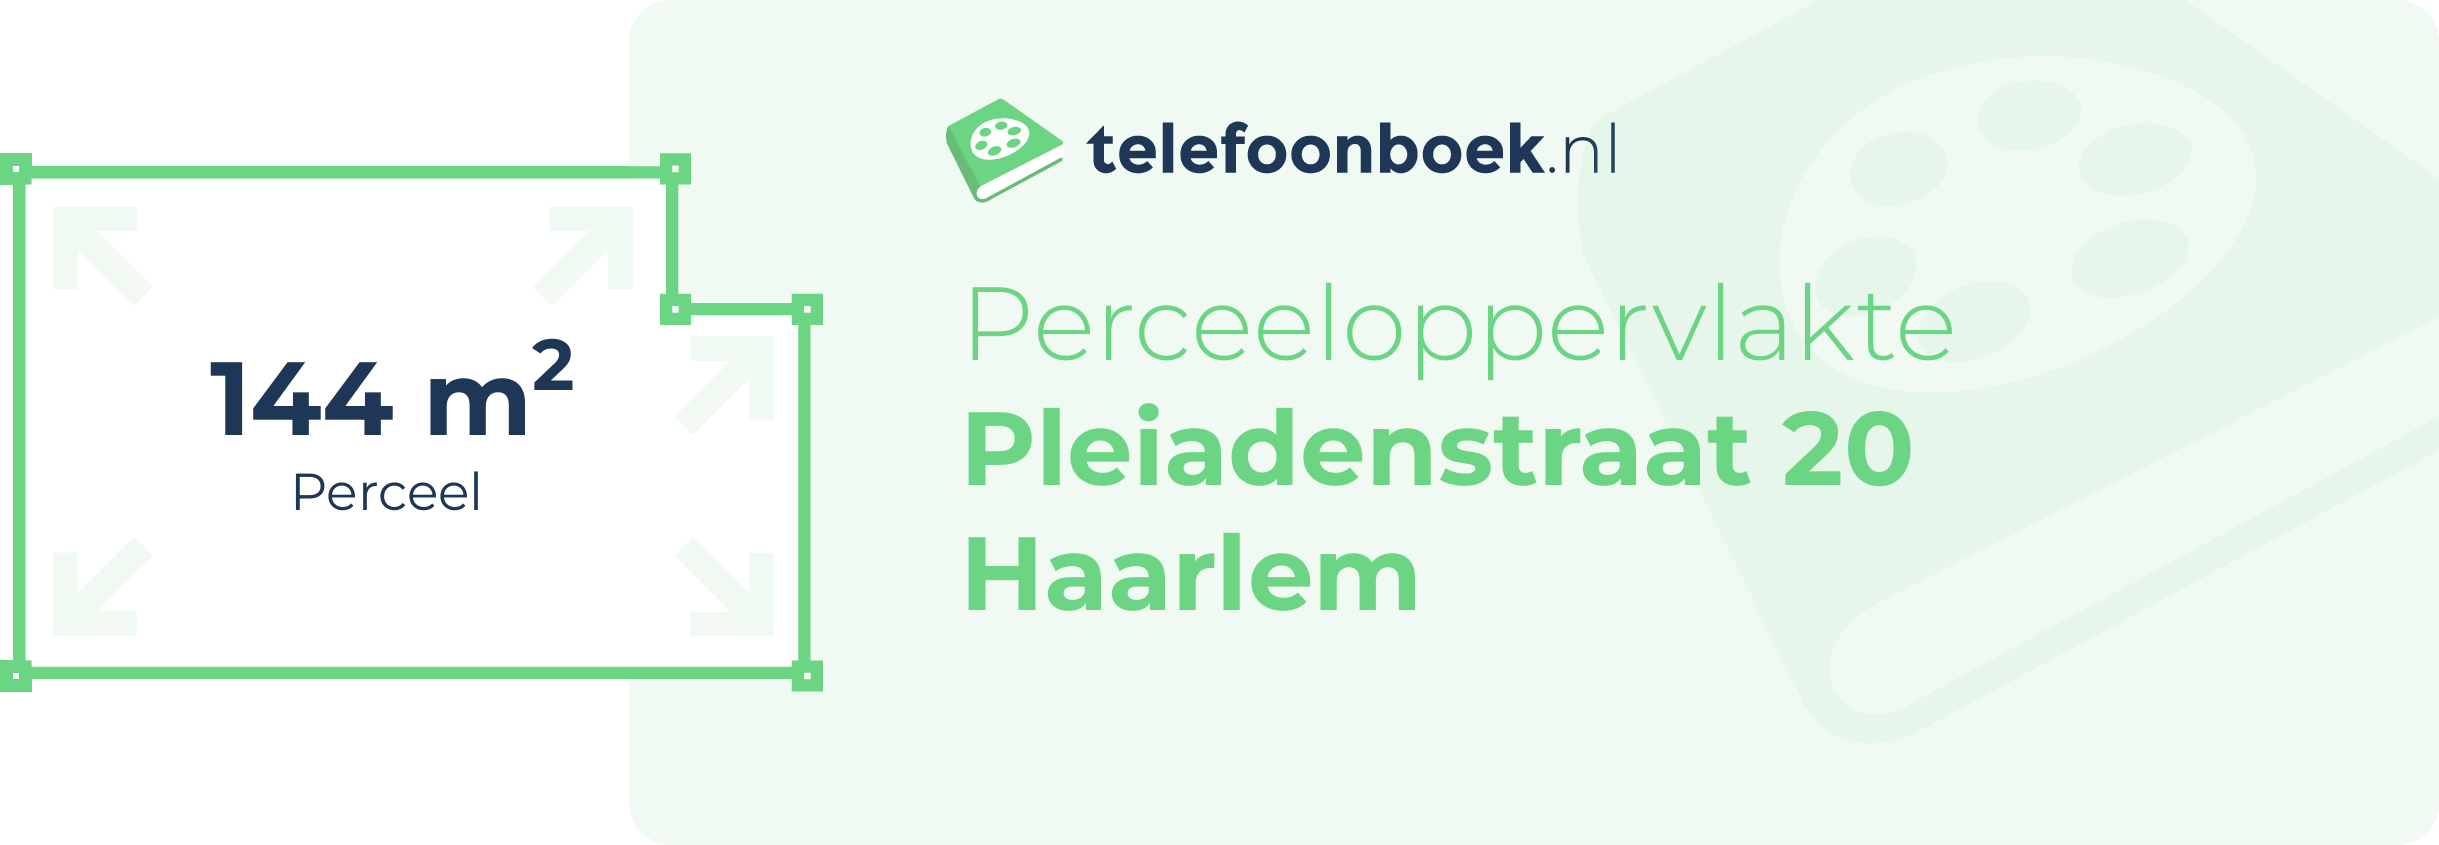 Perceeloppervlakte Pleiadenstraat 20 Haarlem